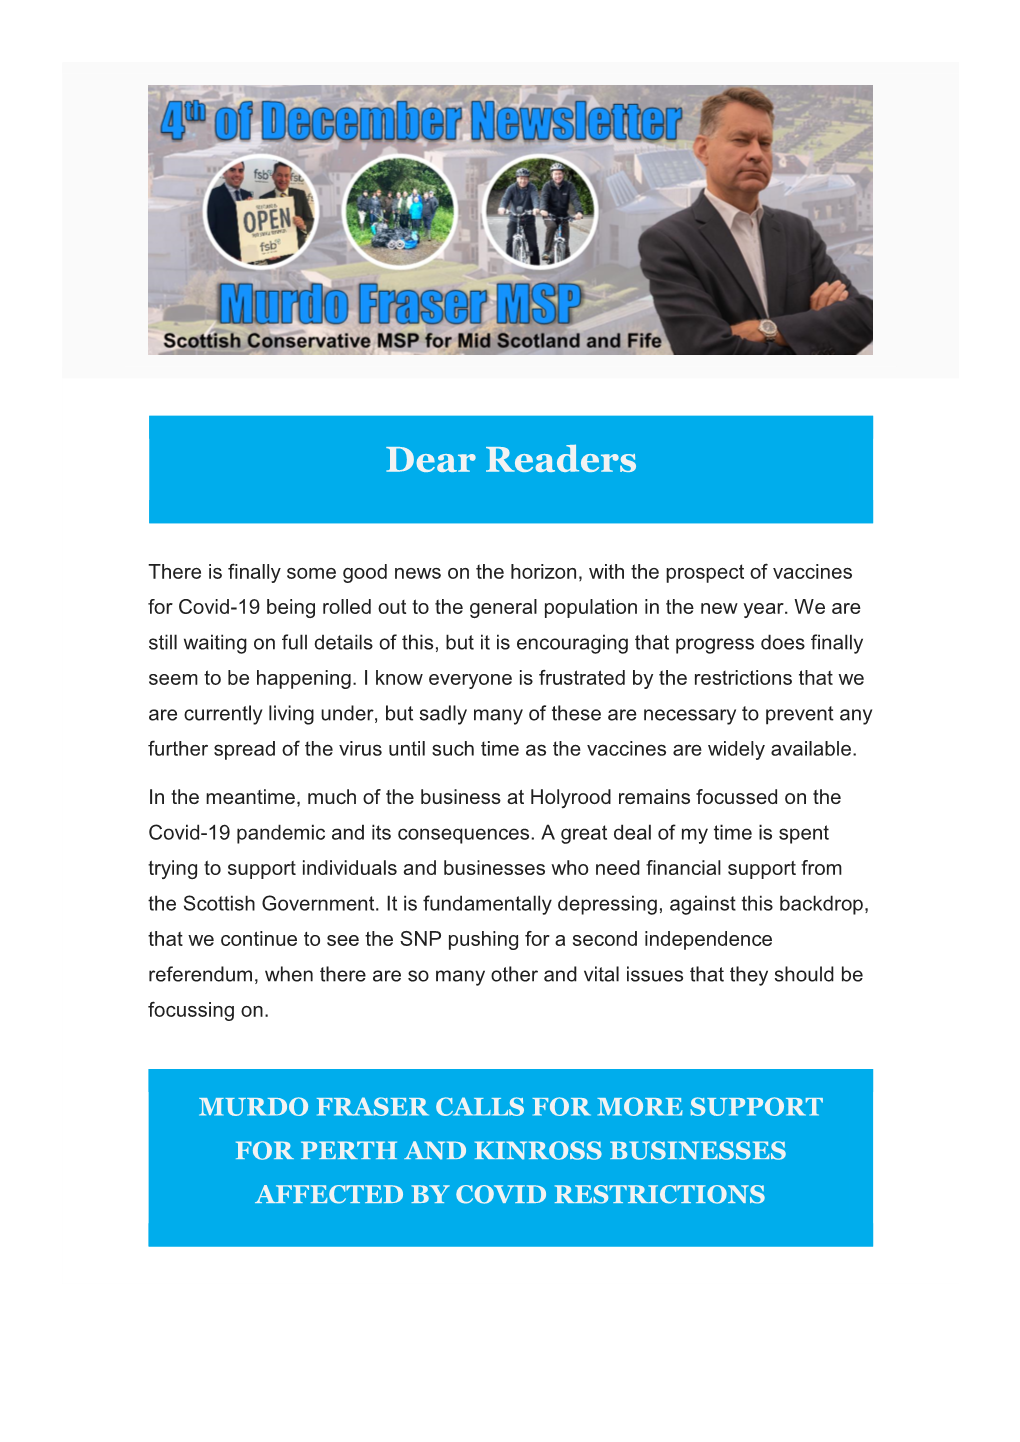 Dear Readers